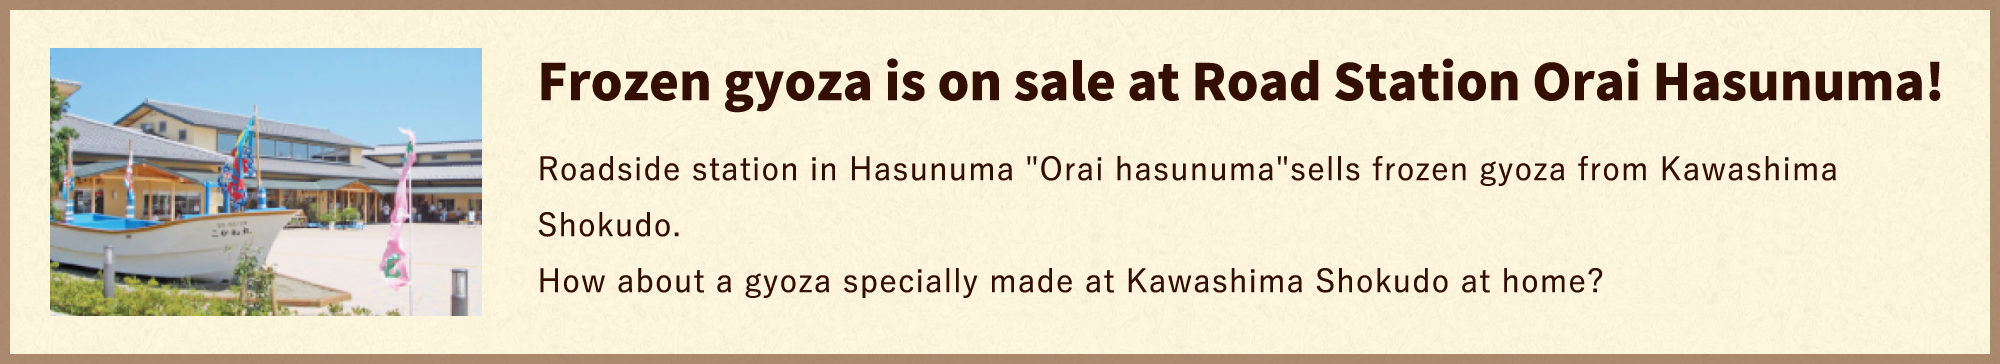 Frozen gyoza is on sale at Road Station Orai Hasunuma!